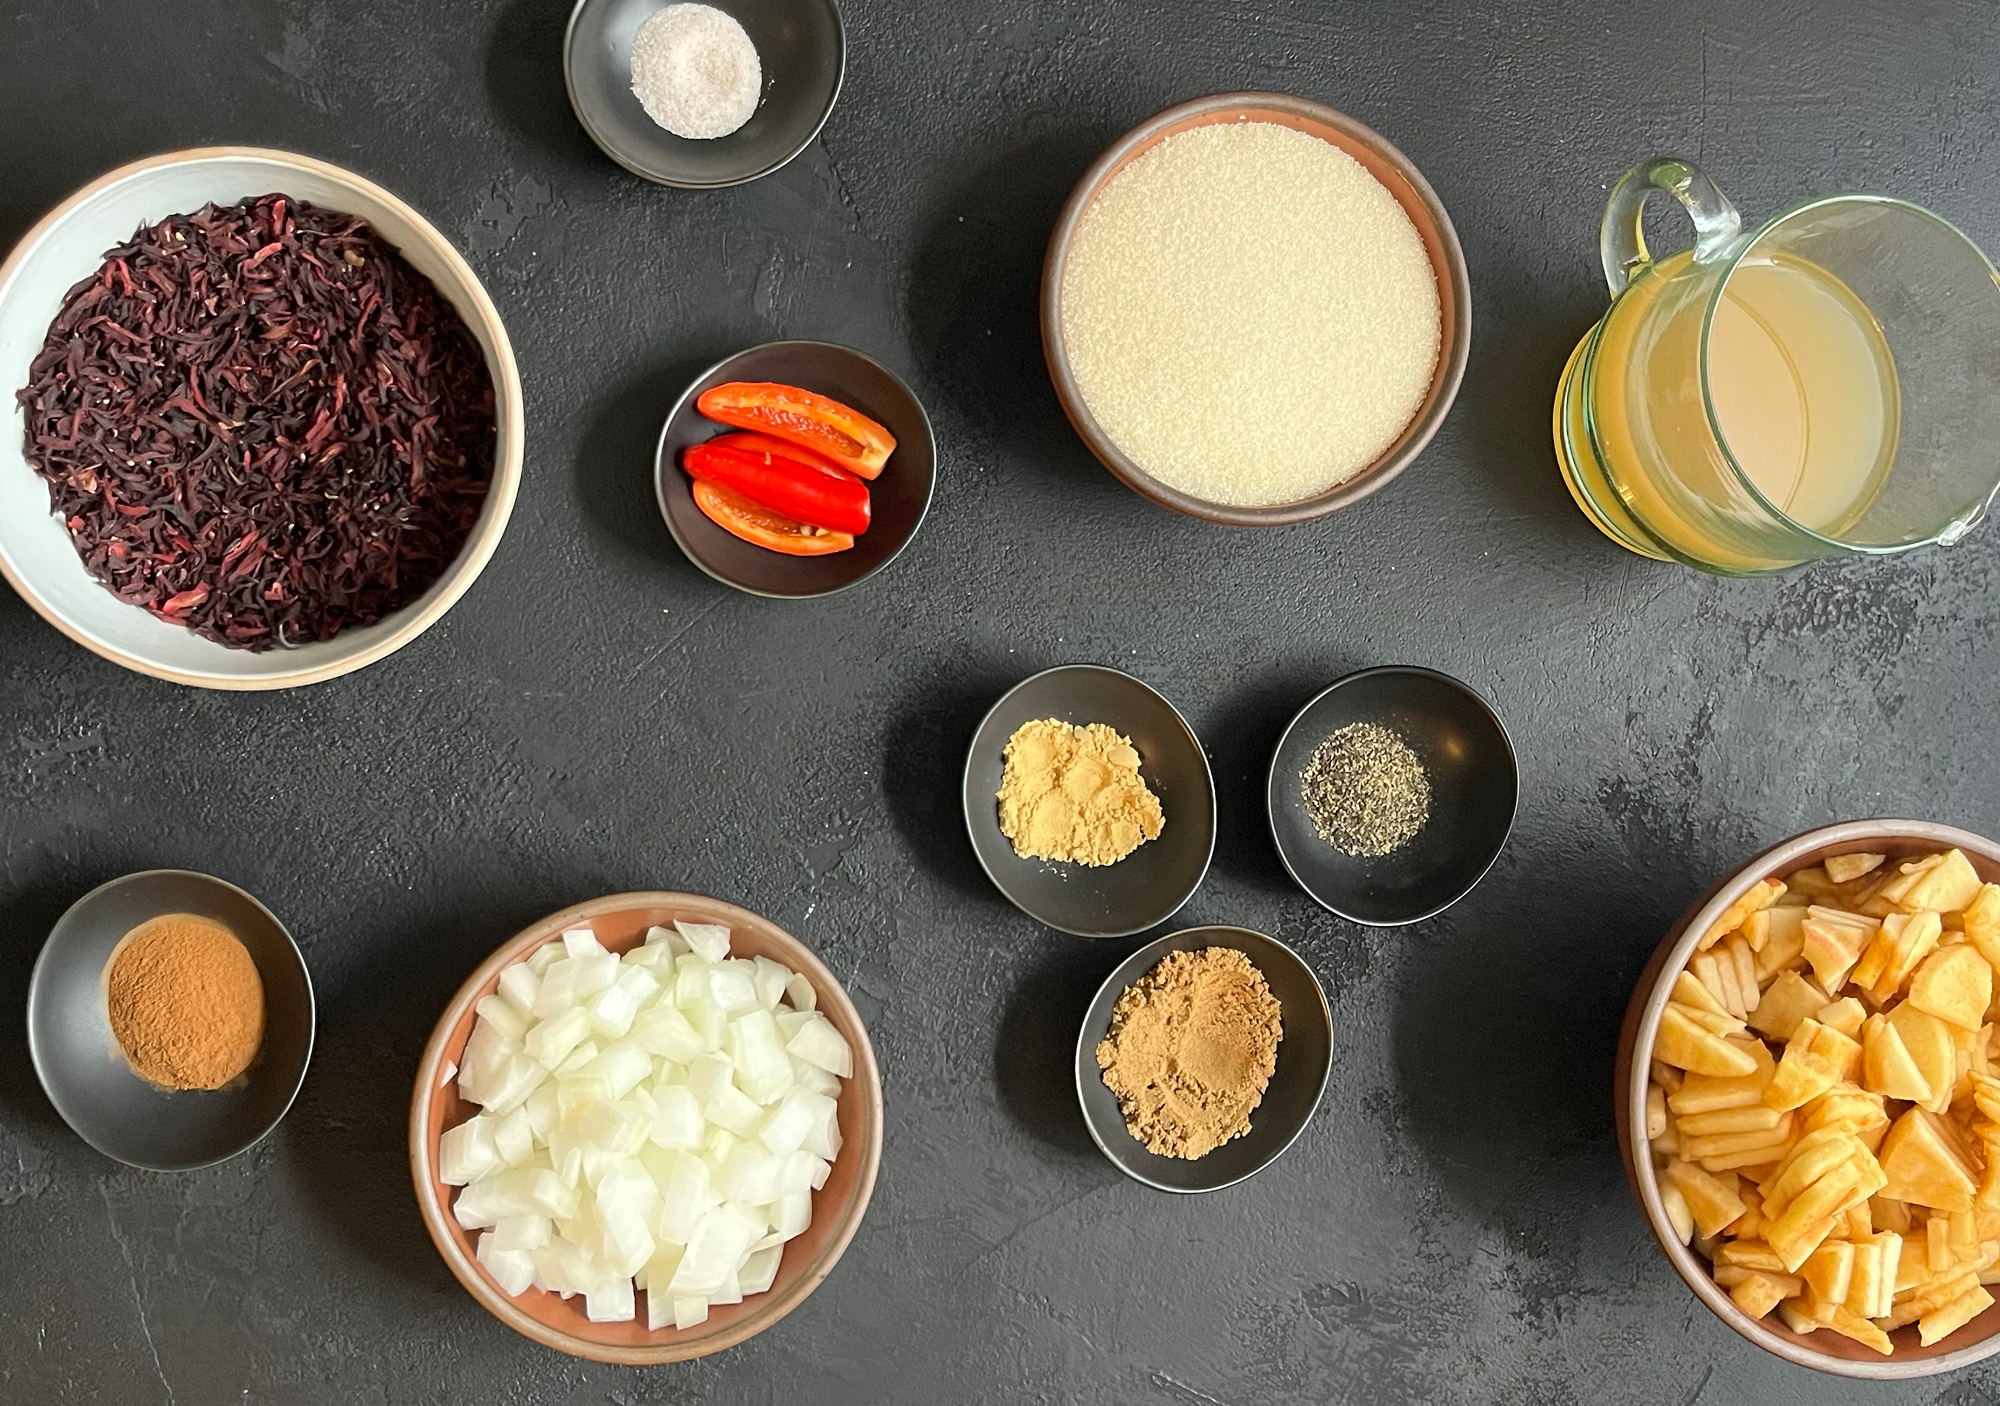 Ingredients for the Hibiscus Chutney recipe.